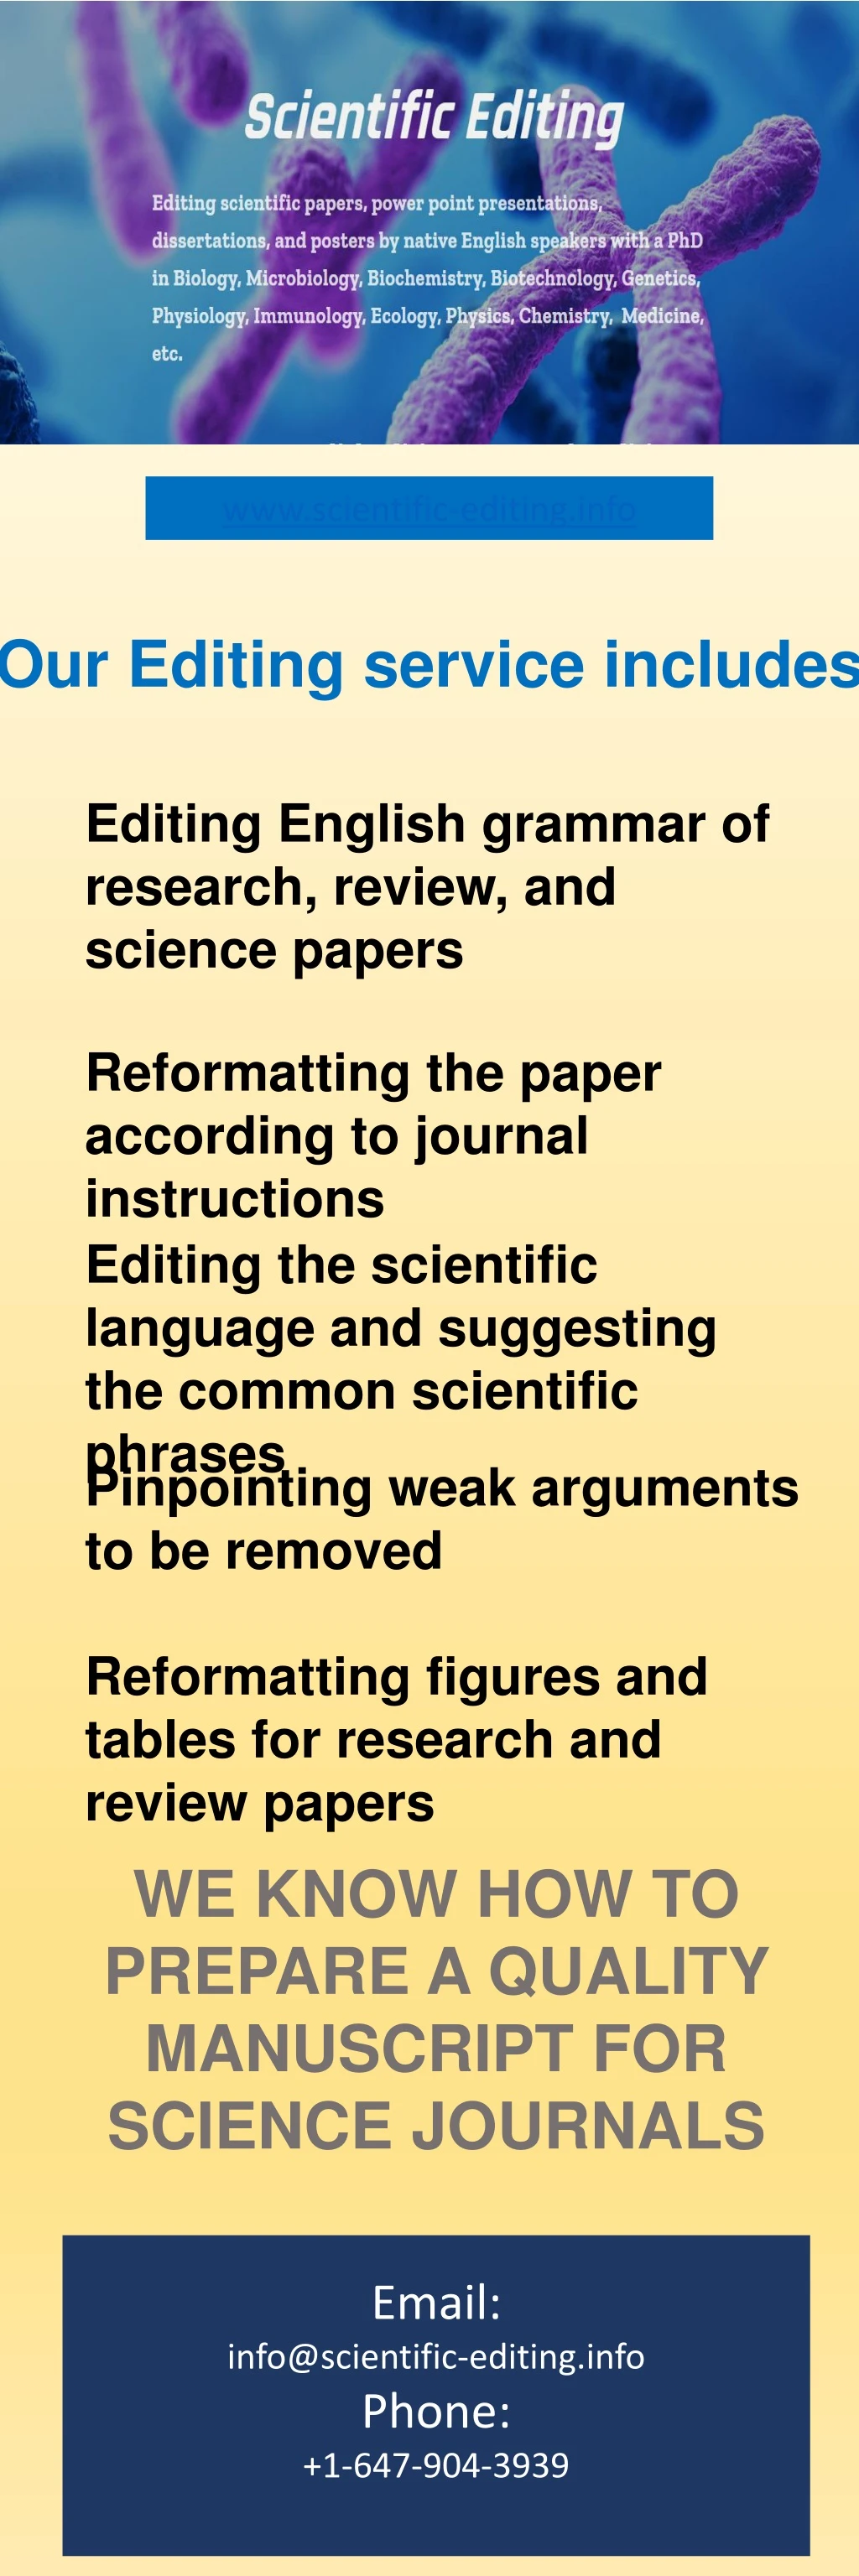 www scientific editing info